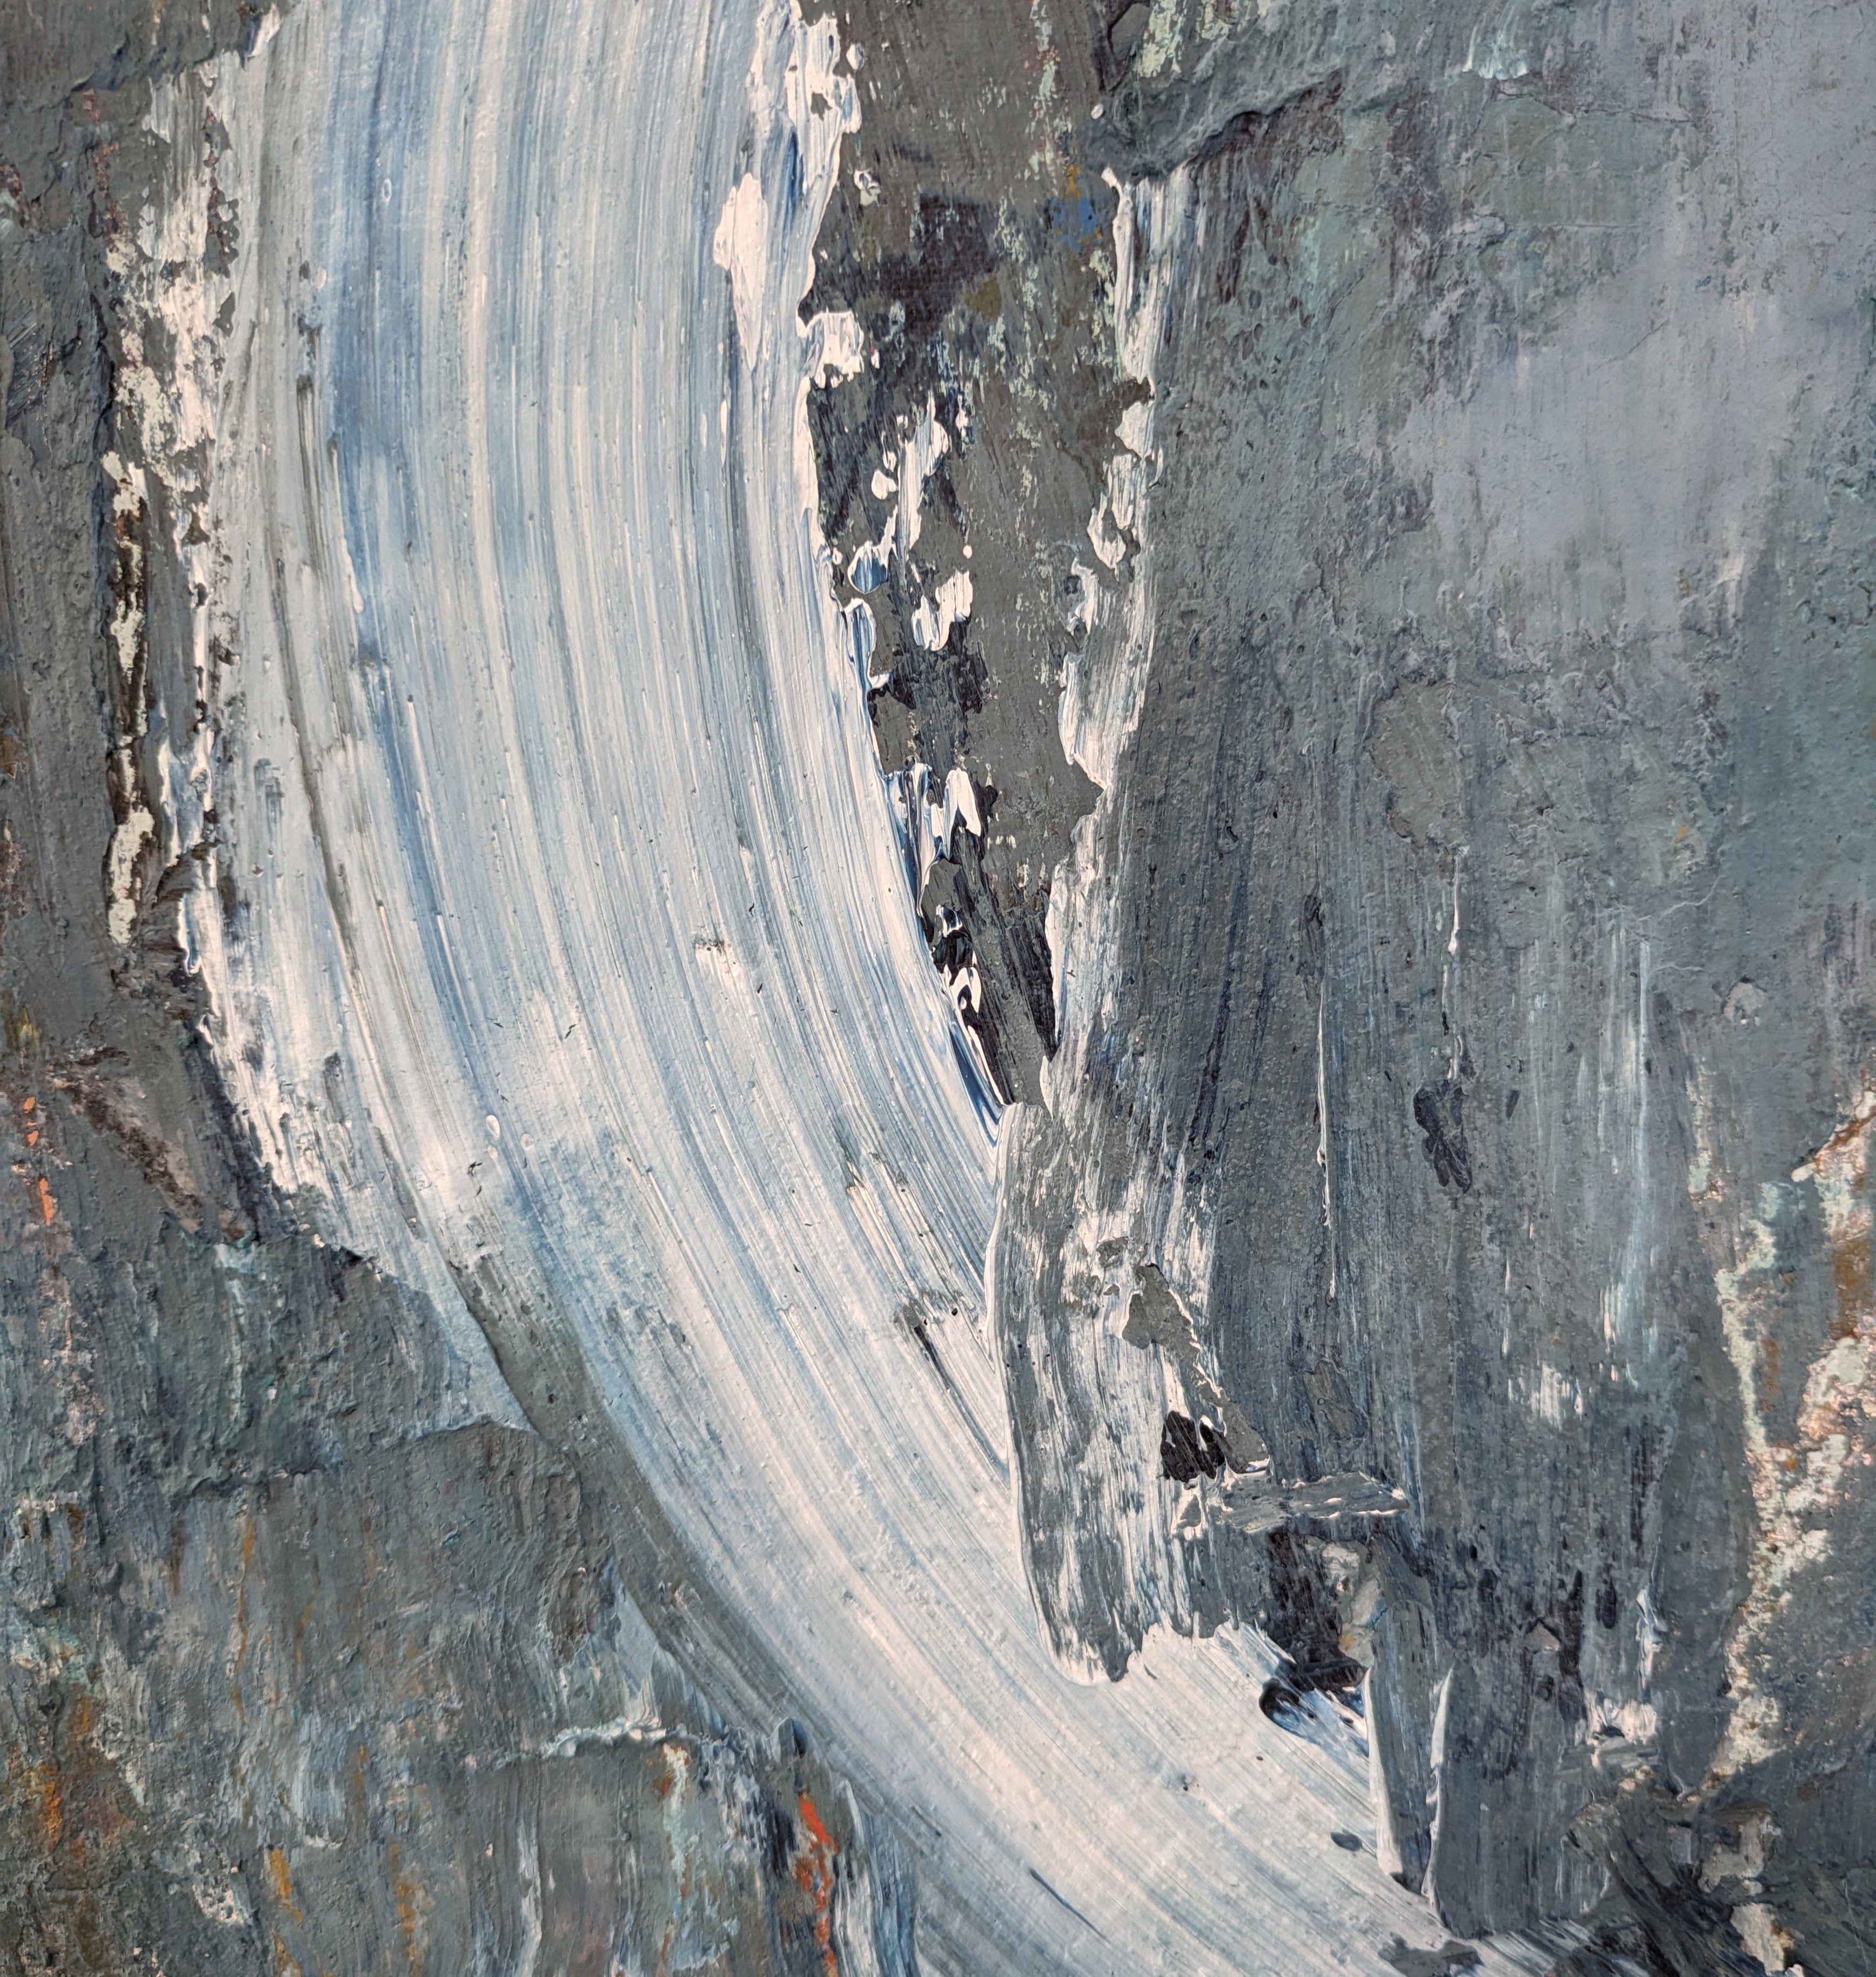 Mary Scott Resonance An original seascape painting Oil paint on canvas 50 cm x 70 cm x 2 cm (unframed size) 55 cm x 75 cm x 3.5 cm (framed size) Sold framed (white painted wood tray frame) Resonance (an original seascape painting) by Mary Scott is